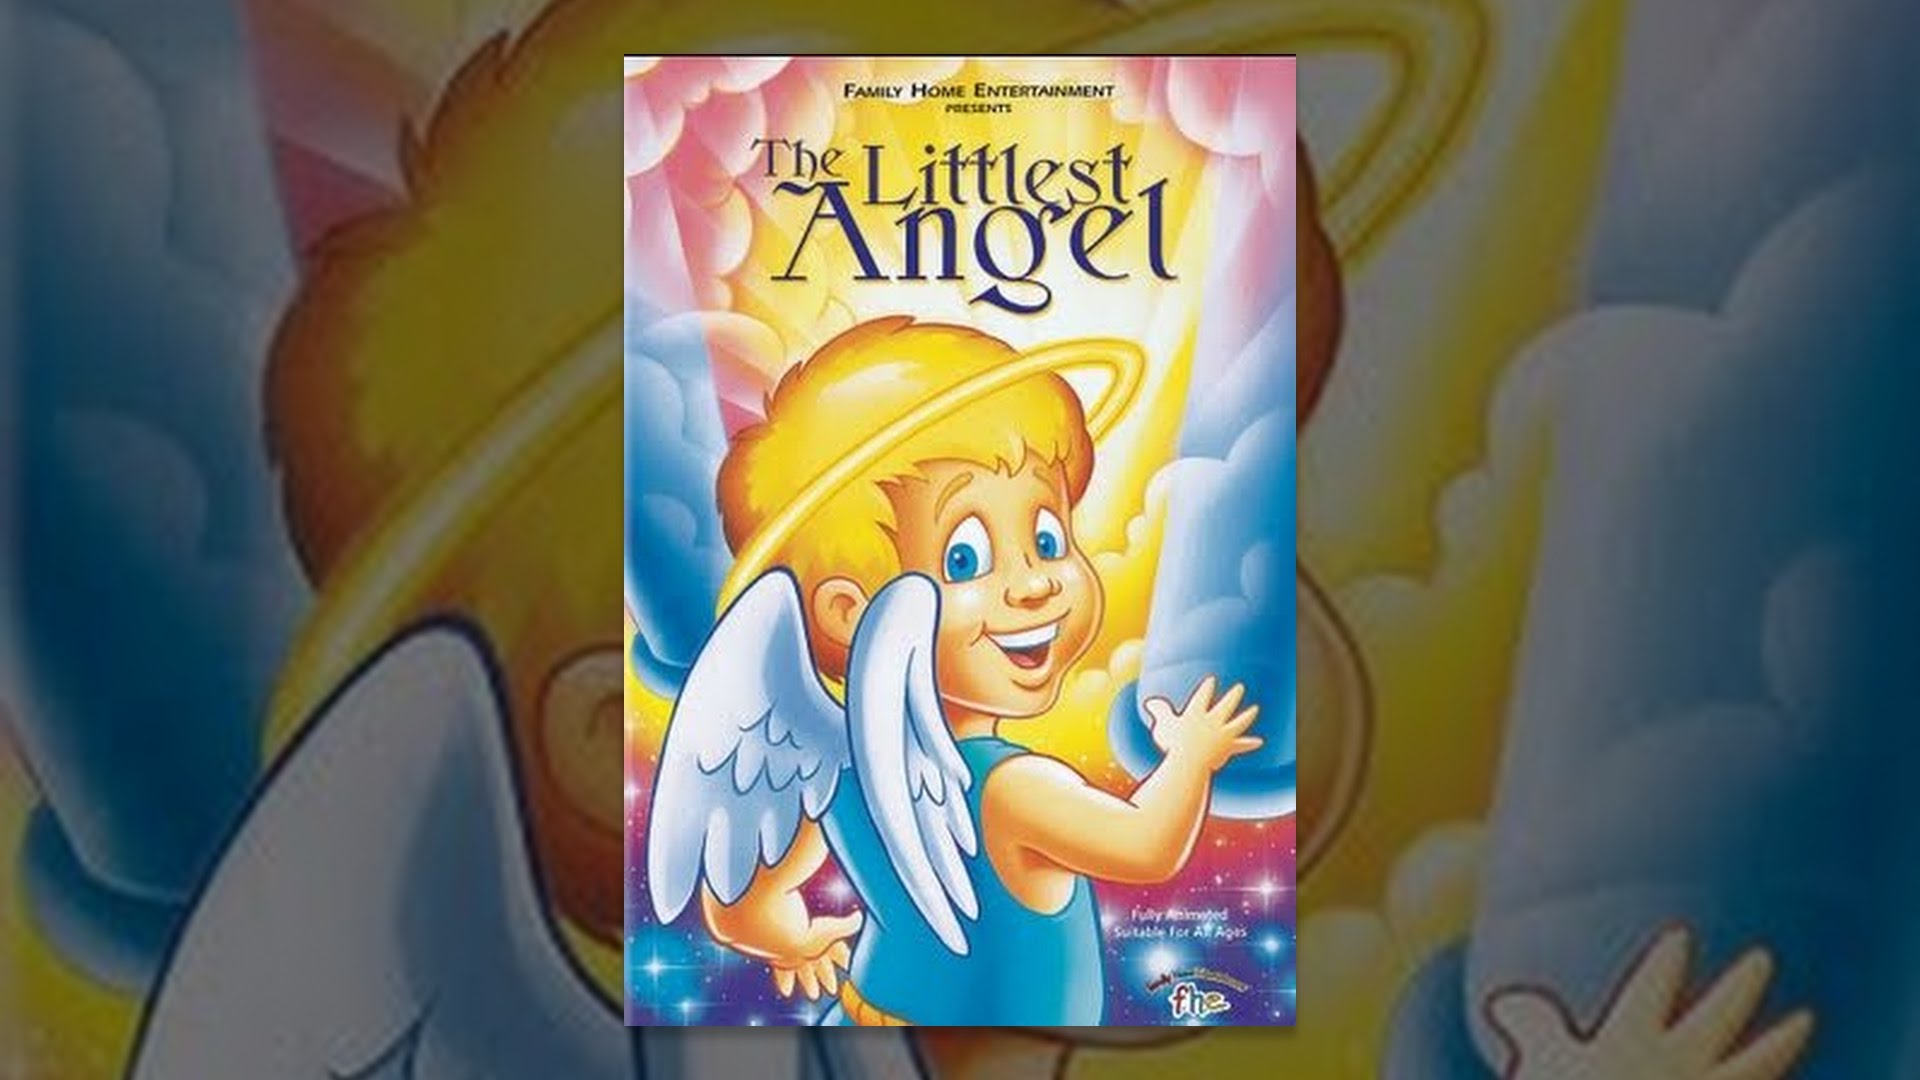 Nik little angel. DVD the Littlest Angel 1997. The Littlest Angel 1997 Mario Jose.